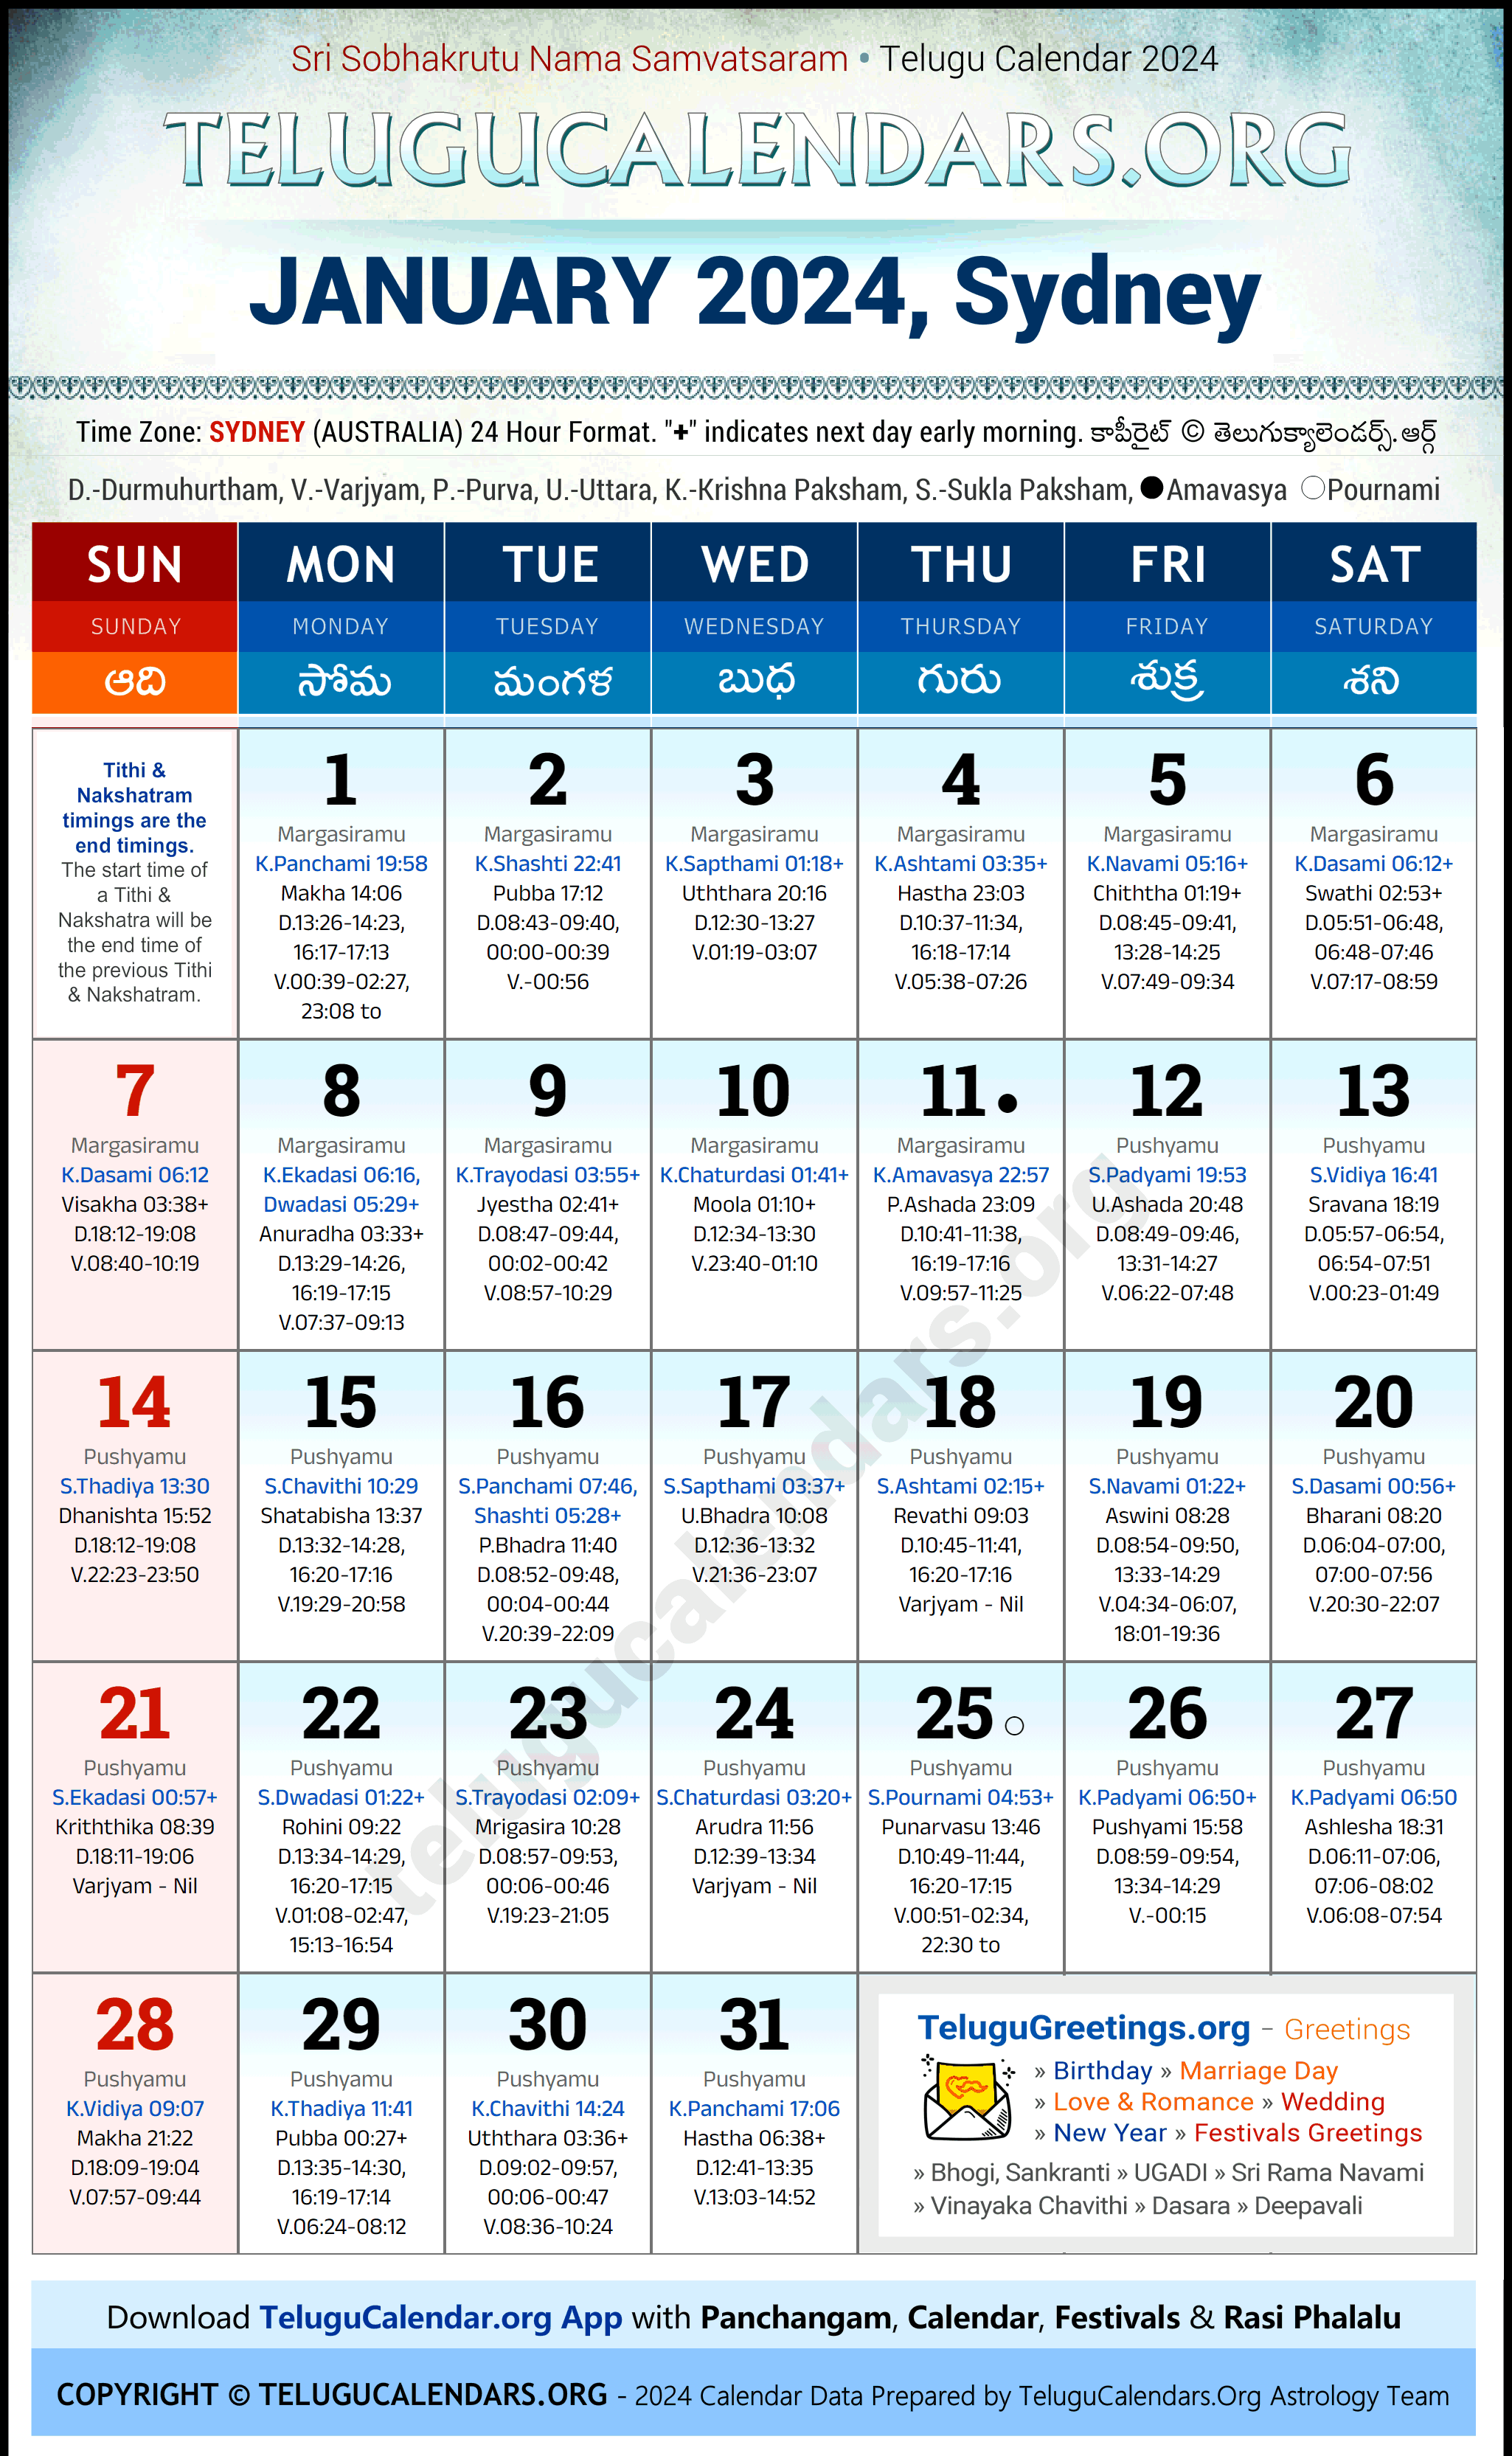 Telugu Calendar 2024 January Festivals for Sydney